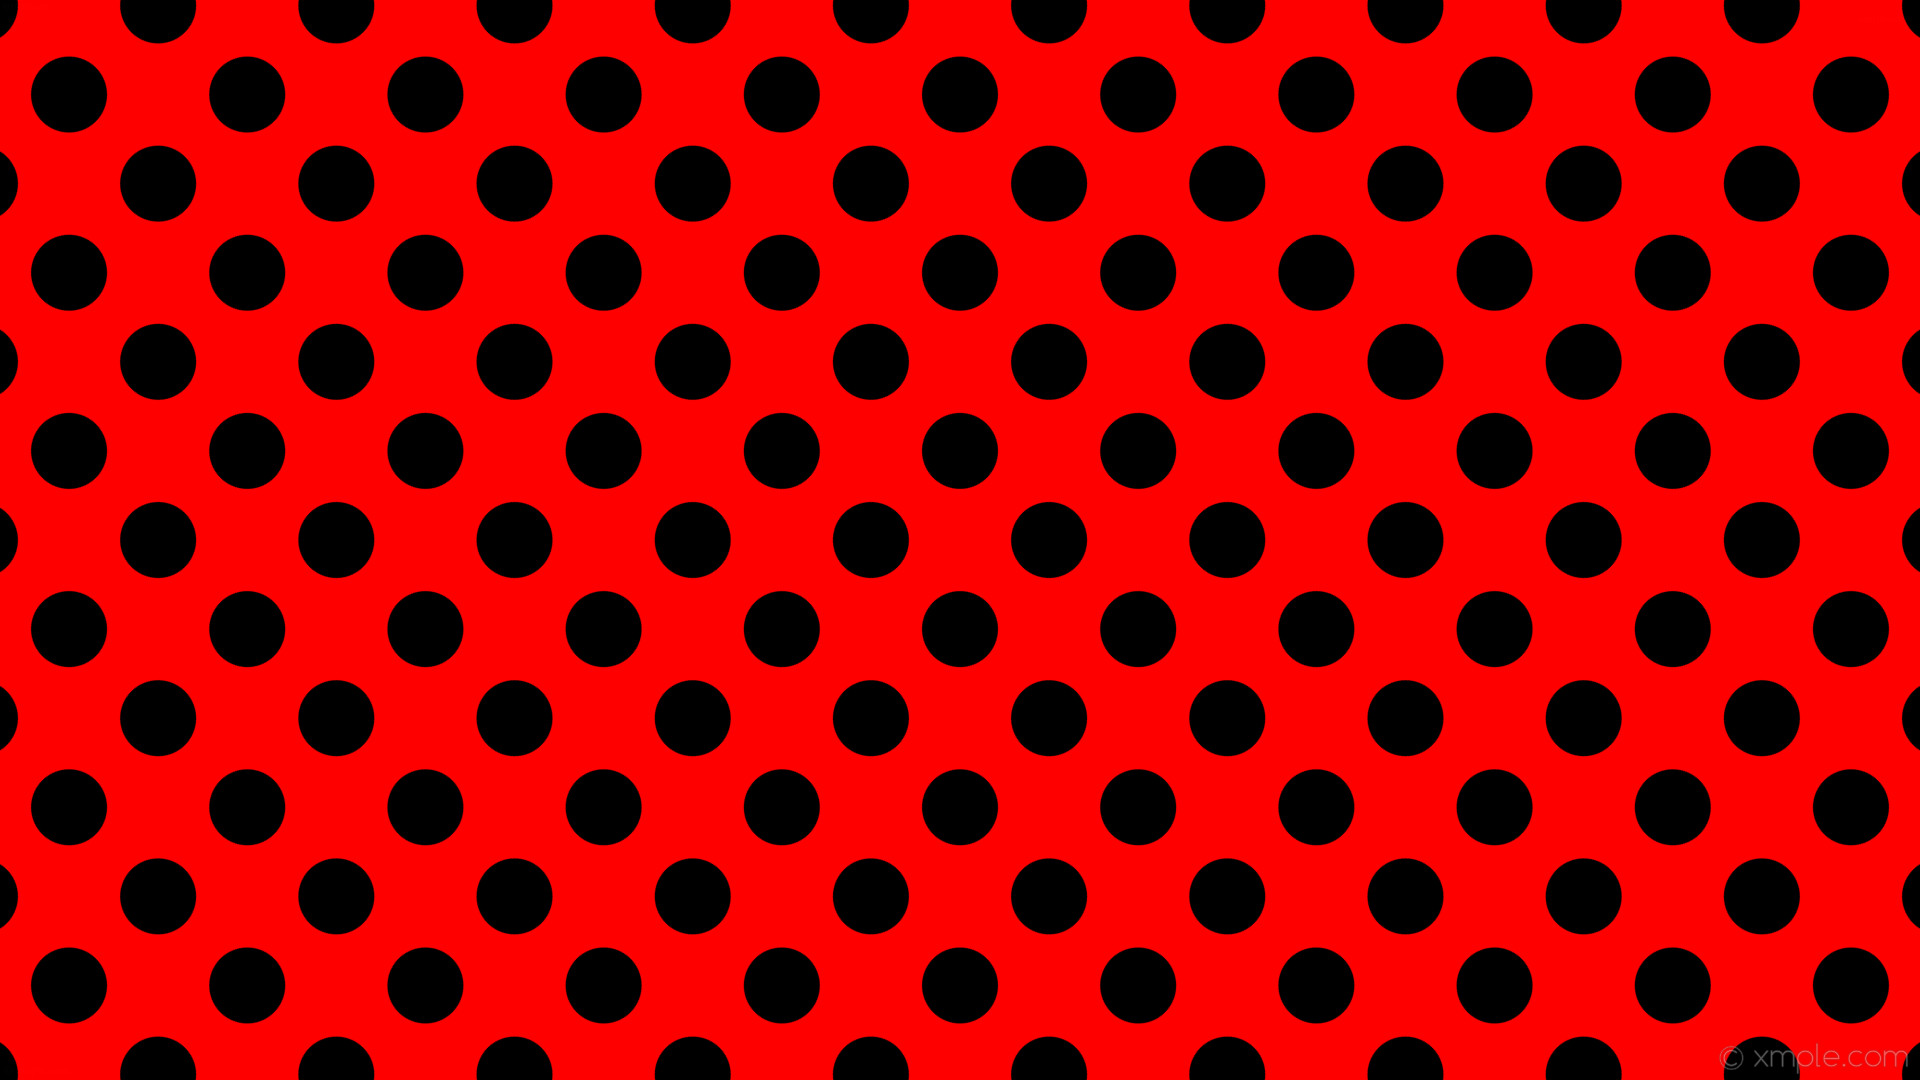 1920x1080 wallpaper red polka black spots dots #ff0000 #000000 225Â° 76px 126px